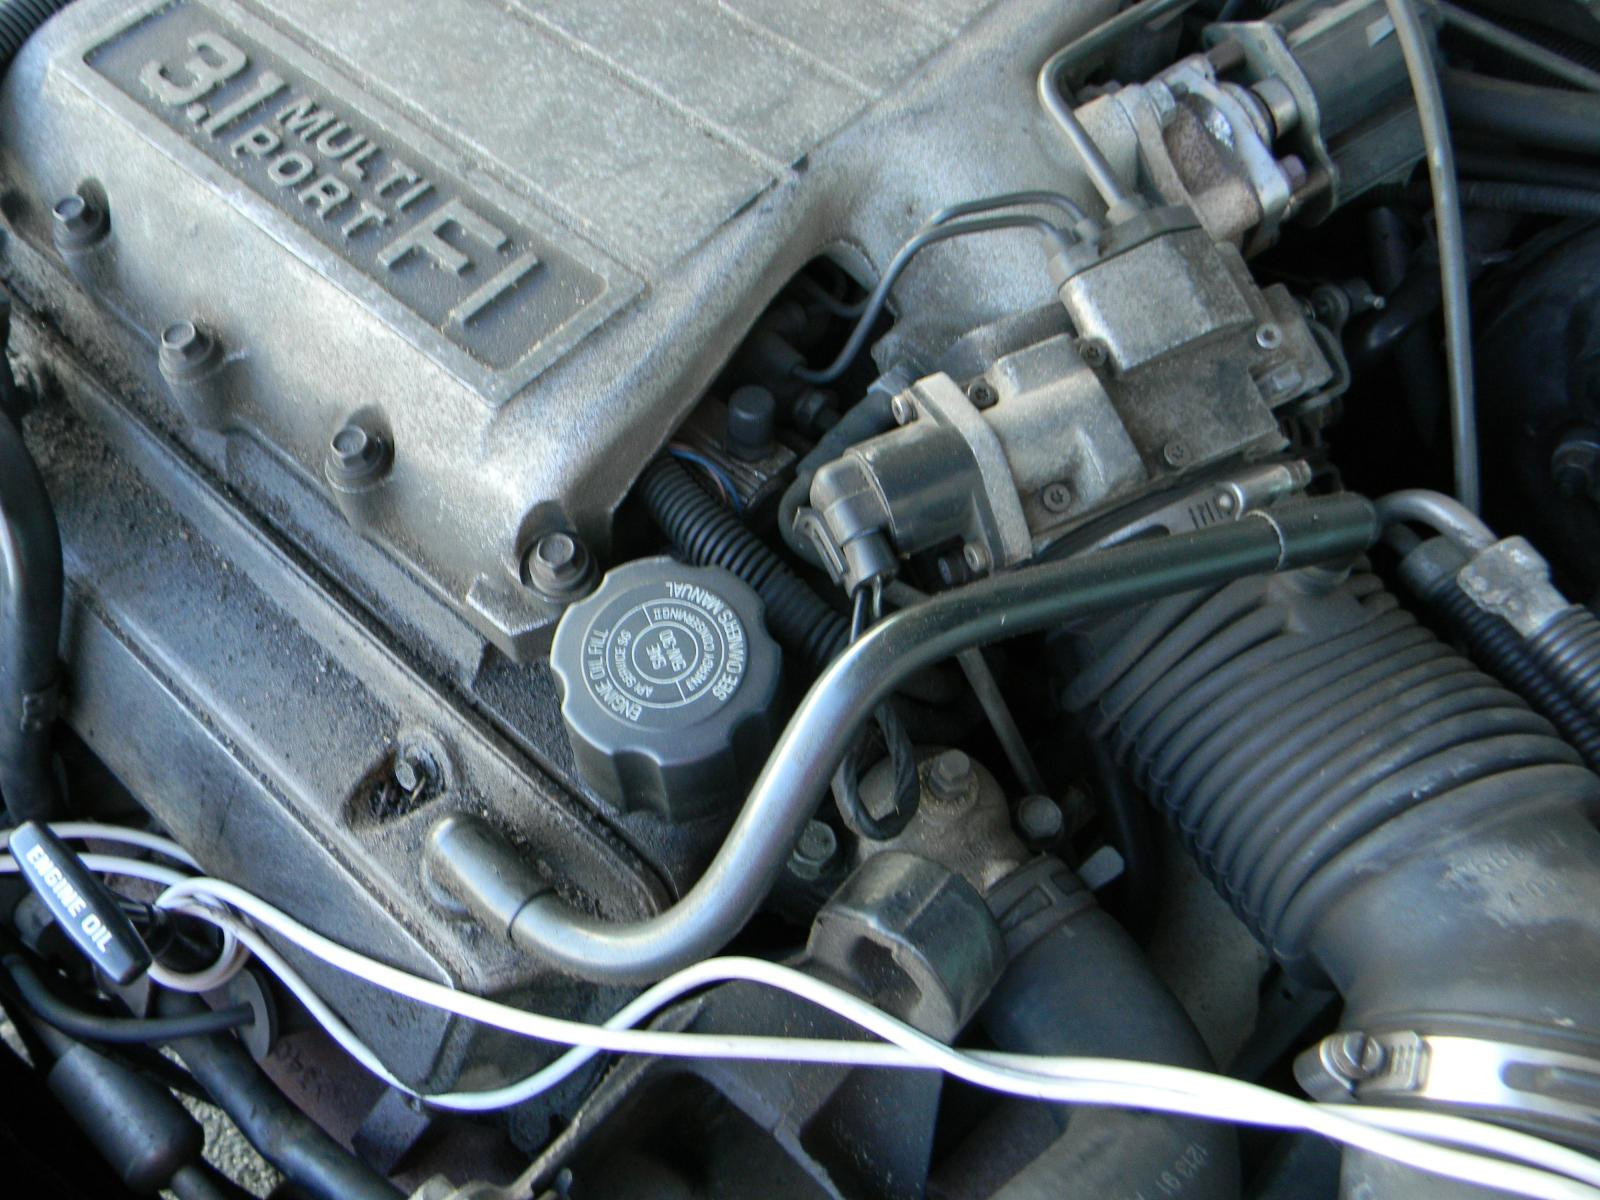 3400 Sfi Engine Cooling System Diagram 3.1 L 1992 Lumina Sedan, Oil Leak, Crack In Manifold or Engine … Of 3400 Sfi Engine Cooling System Diagram